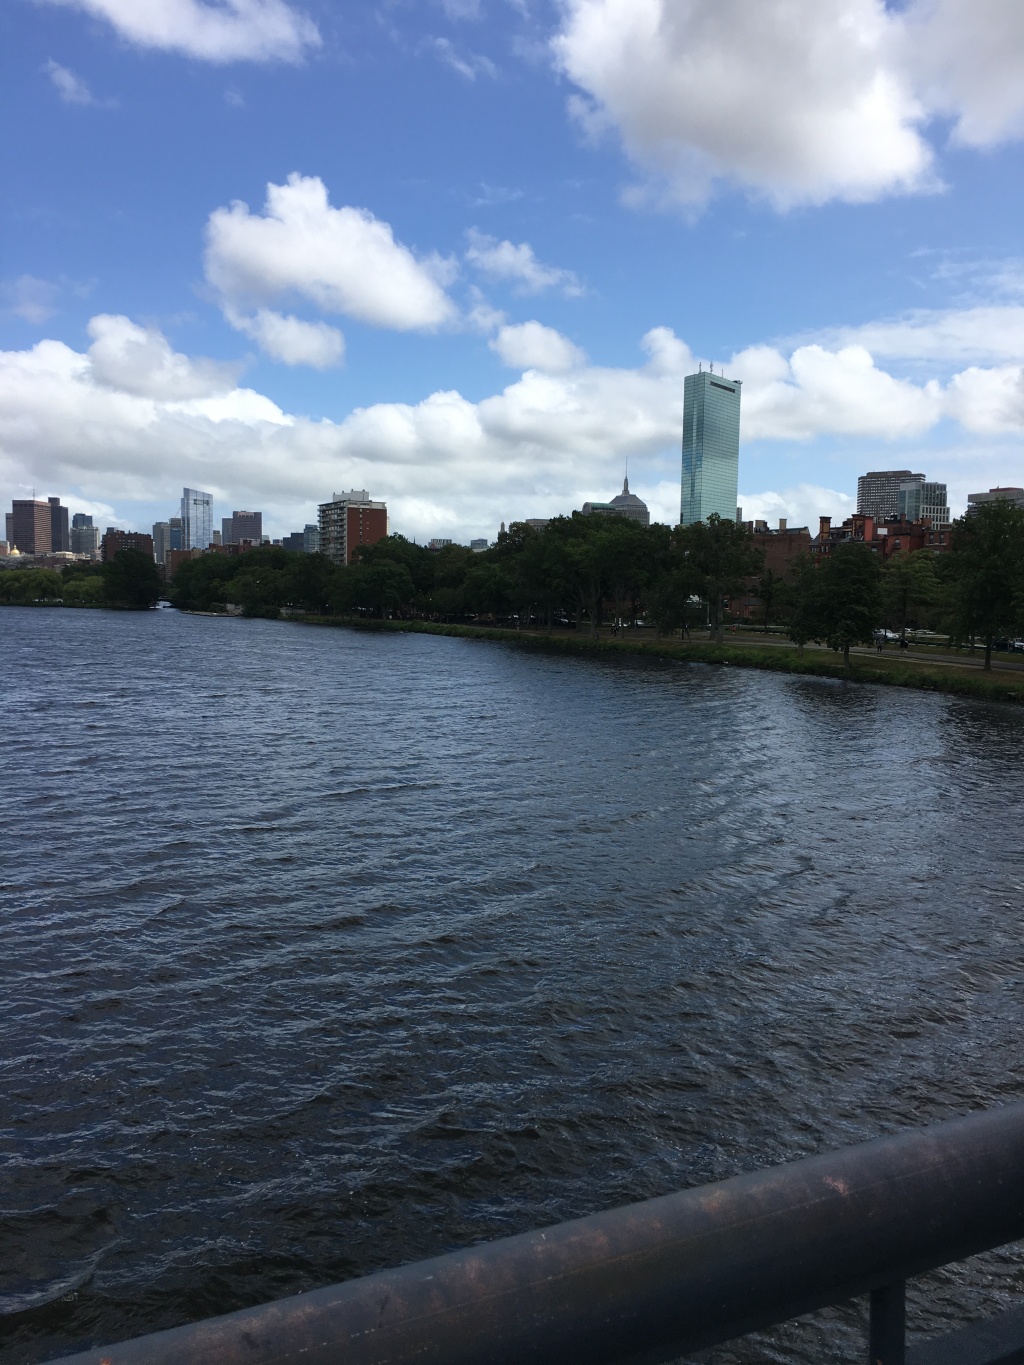 Boston: Simple Exploring Back in Time